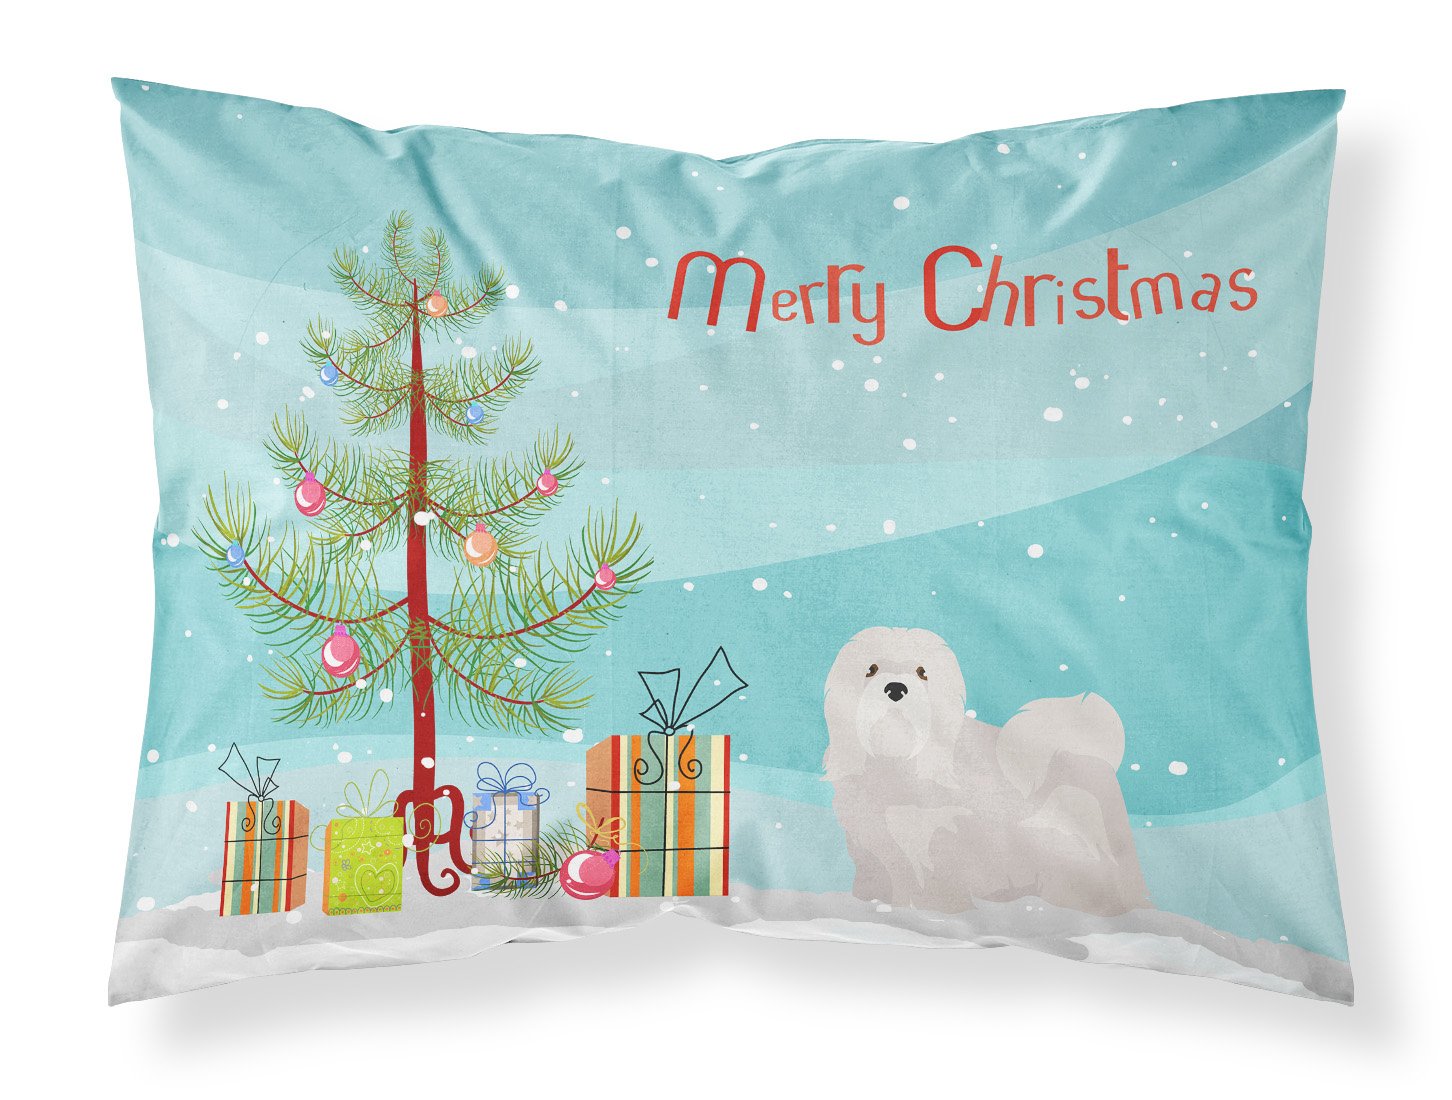 White Lhasa Apso Christmas Tree Fabric Standard Pillowcase CK3469PILLOWCASE by Caroline's Treasures